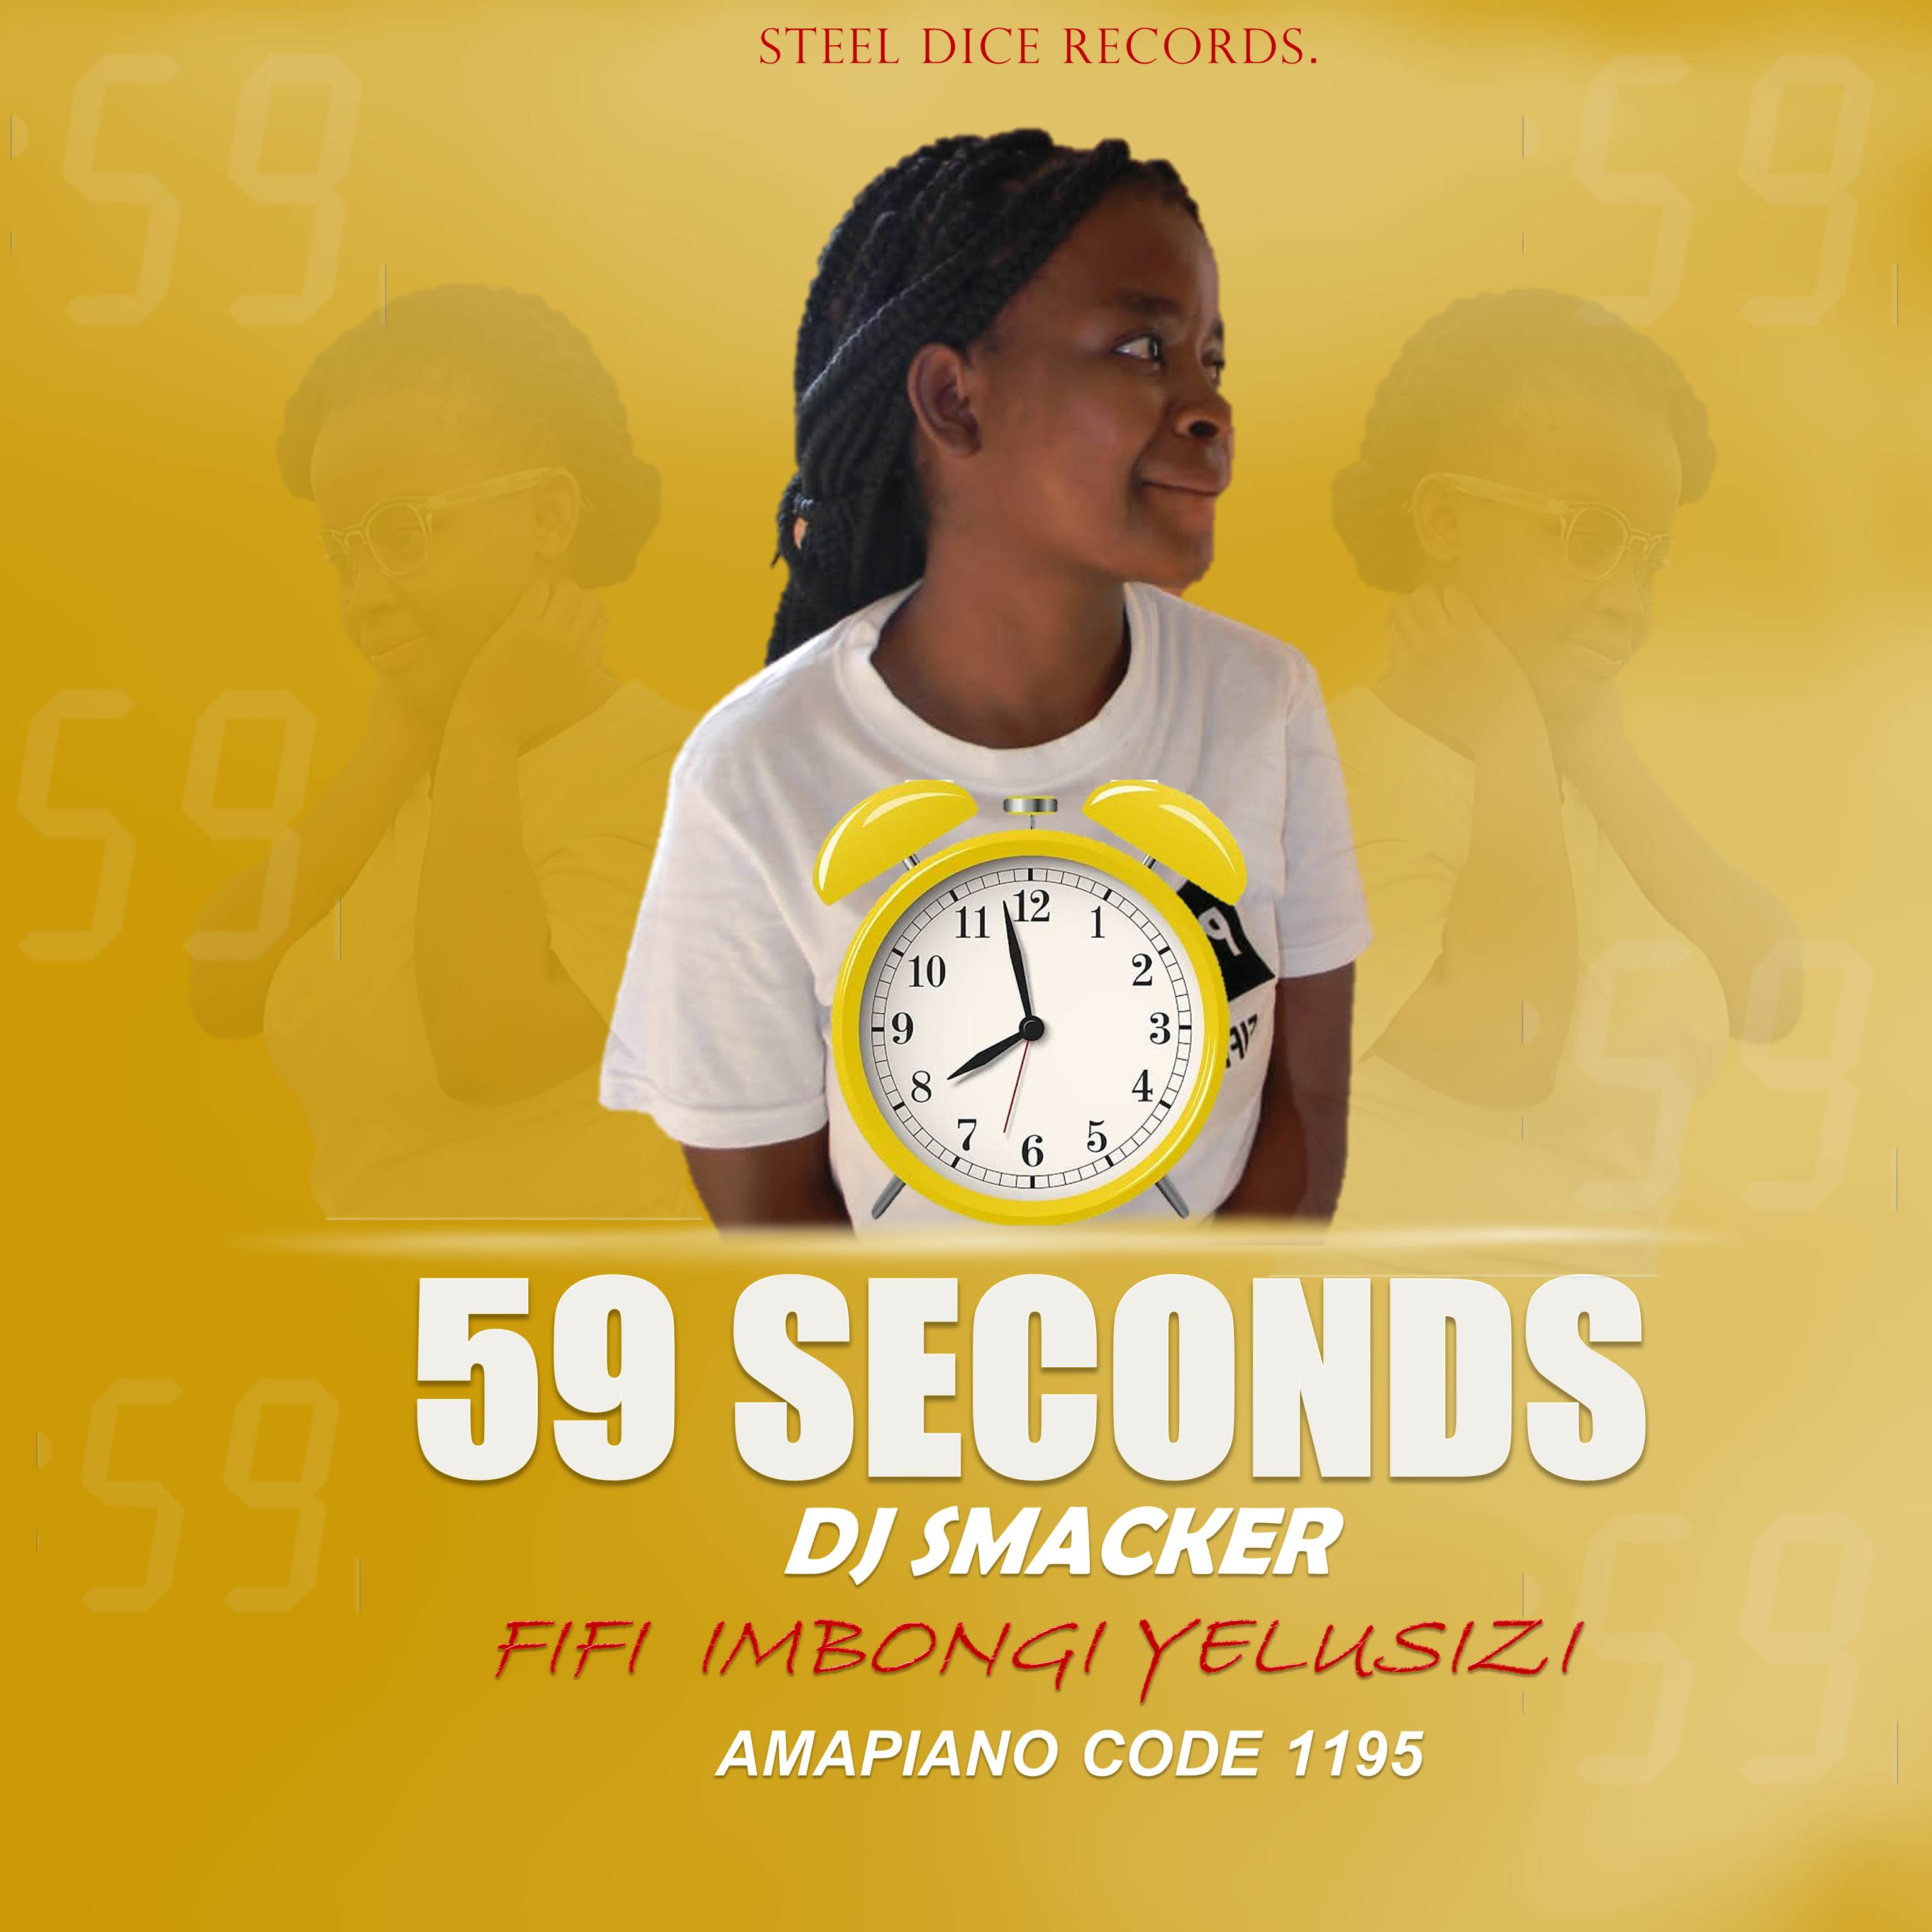 59 seconds ft Fifi Imbongi yelusizi - Dj Smacker